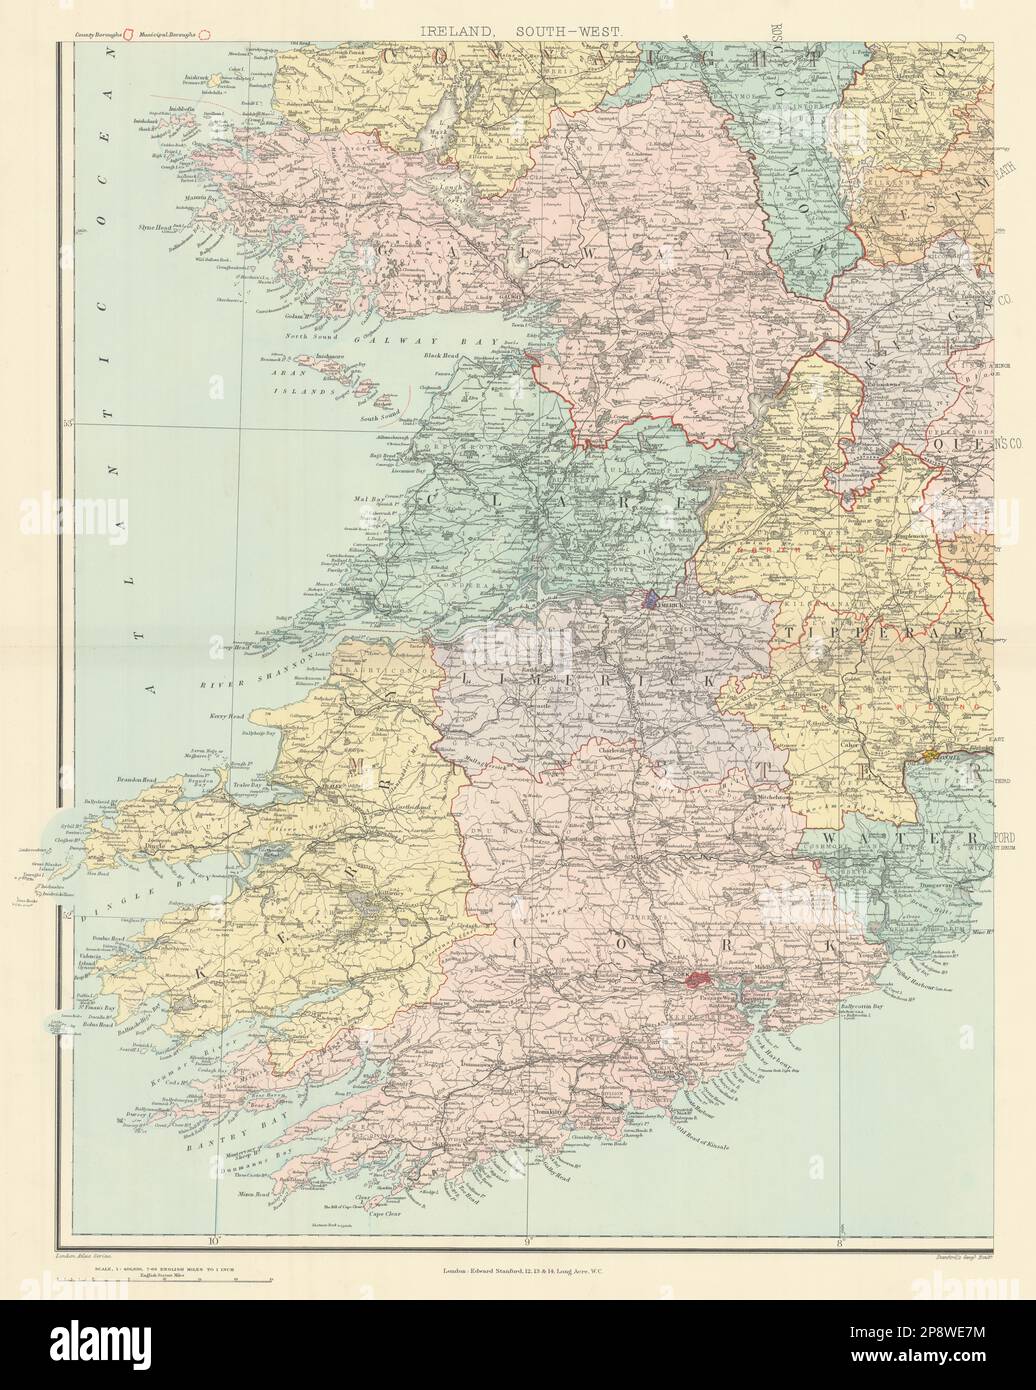 Irlanda al suroeste de Munster Kerry Limerick Cork Clare Limerick. Mapa de STANFORD 1904 Foto de stock